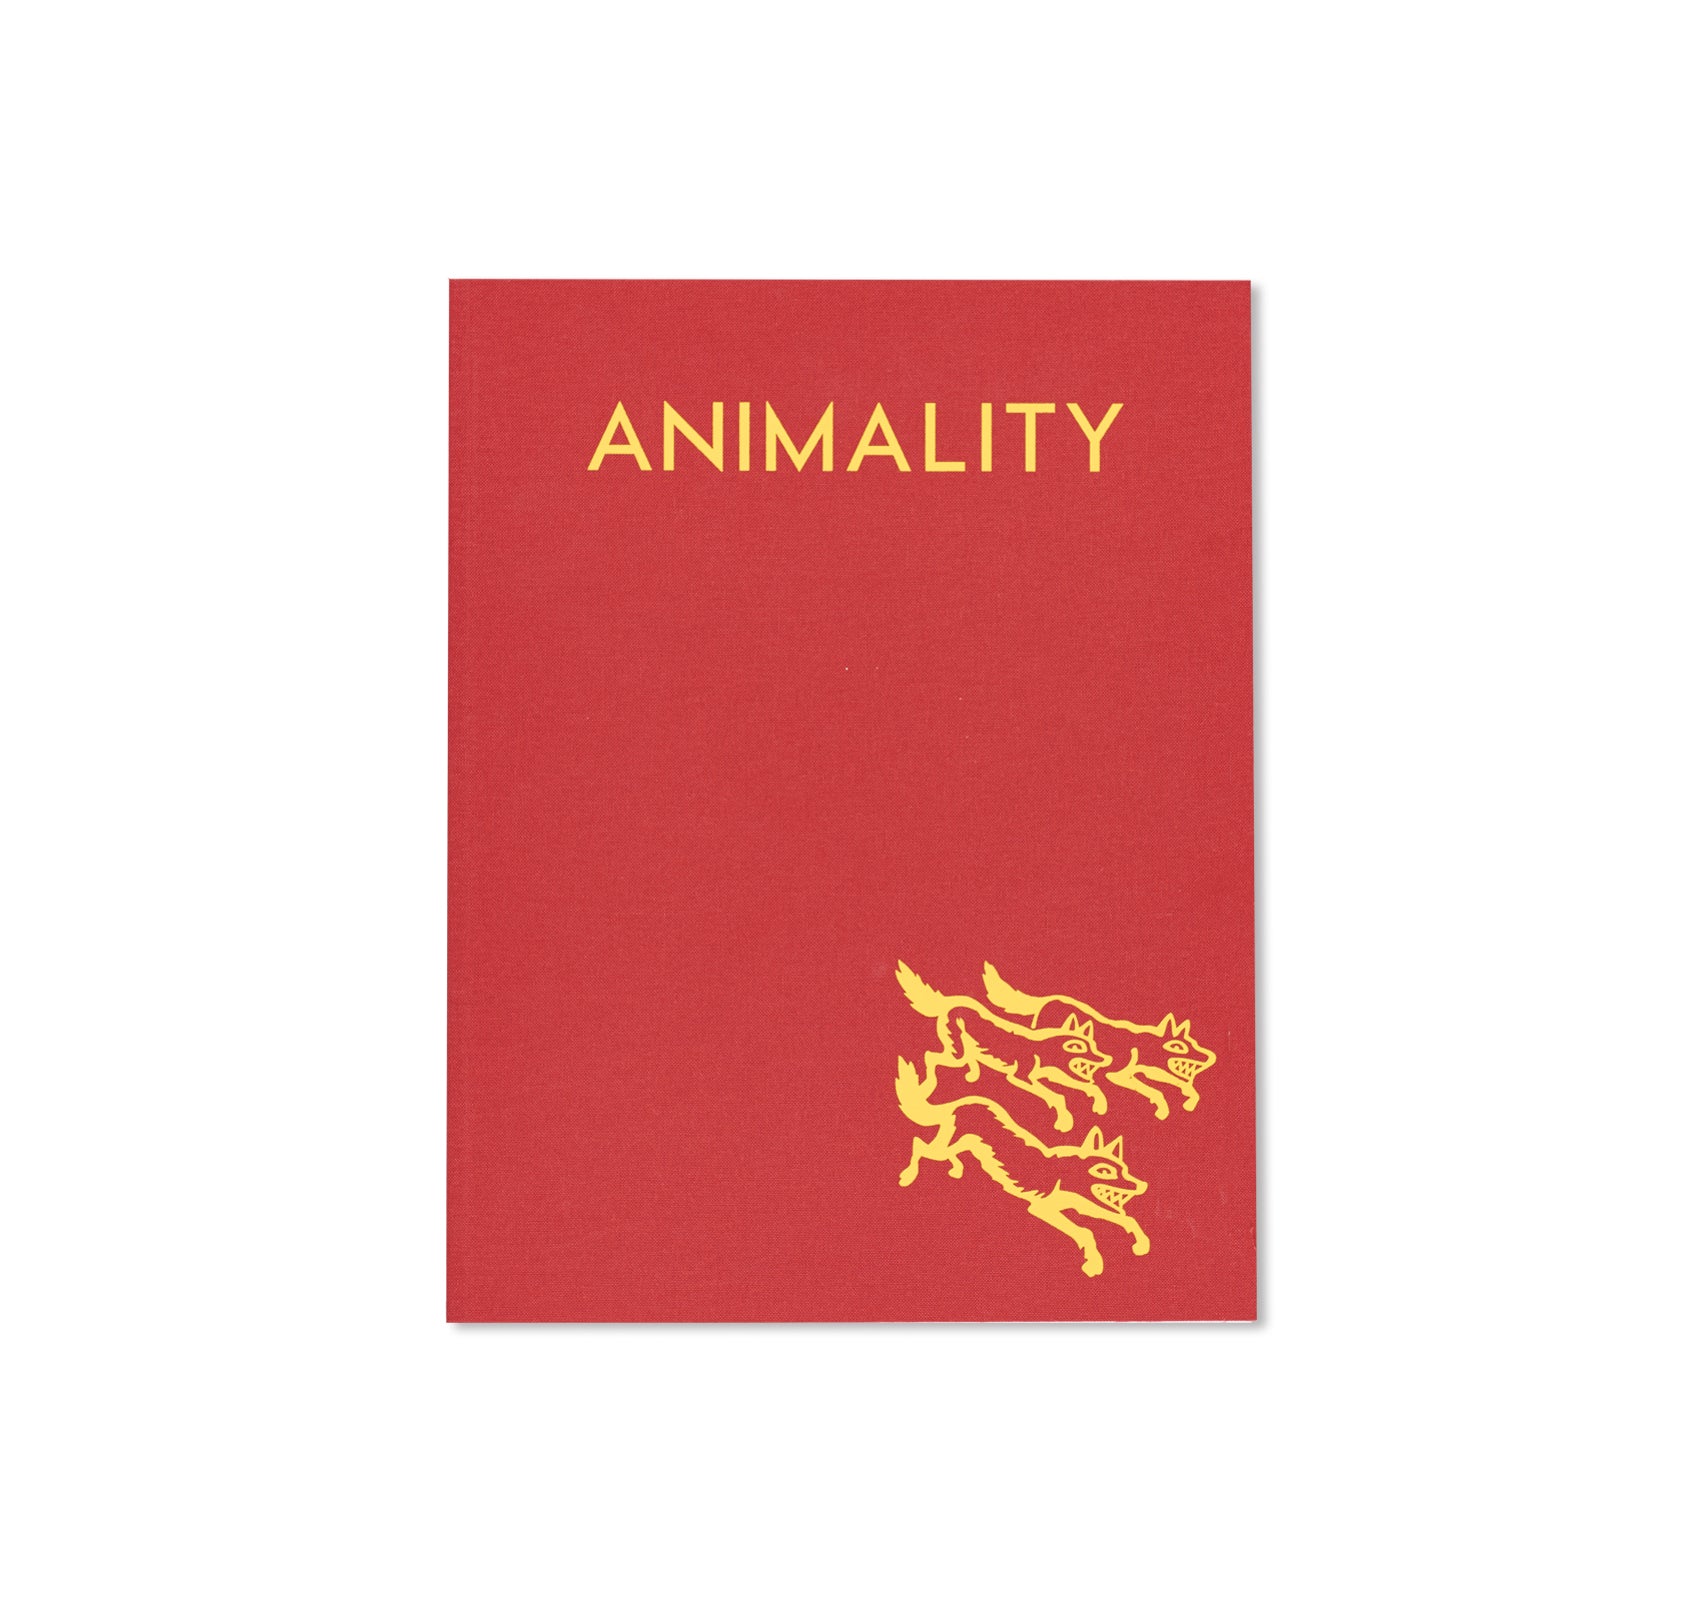 ANIMALITY by Jens Hoffmann